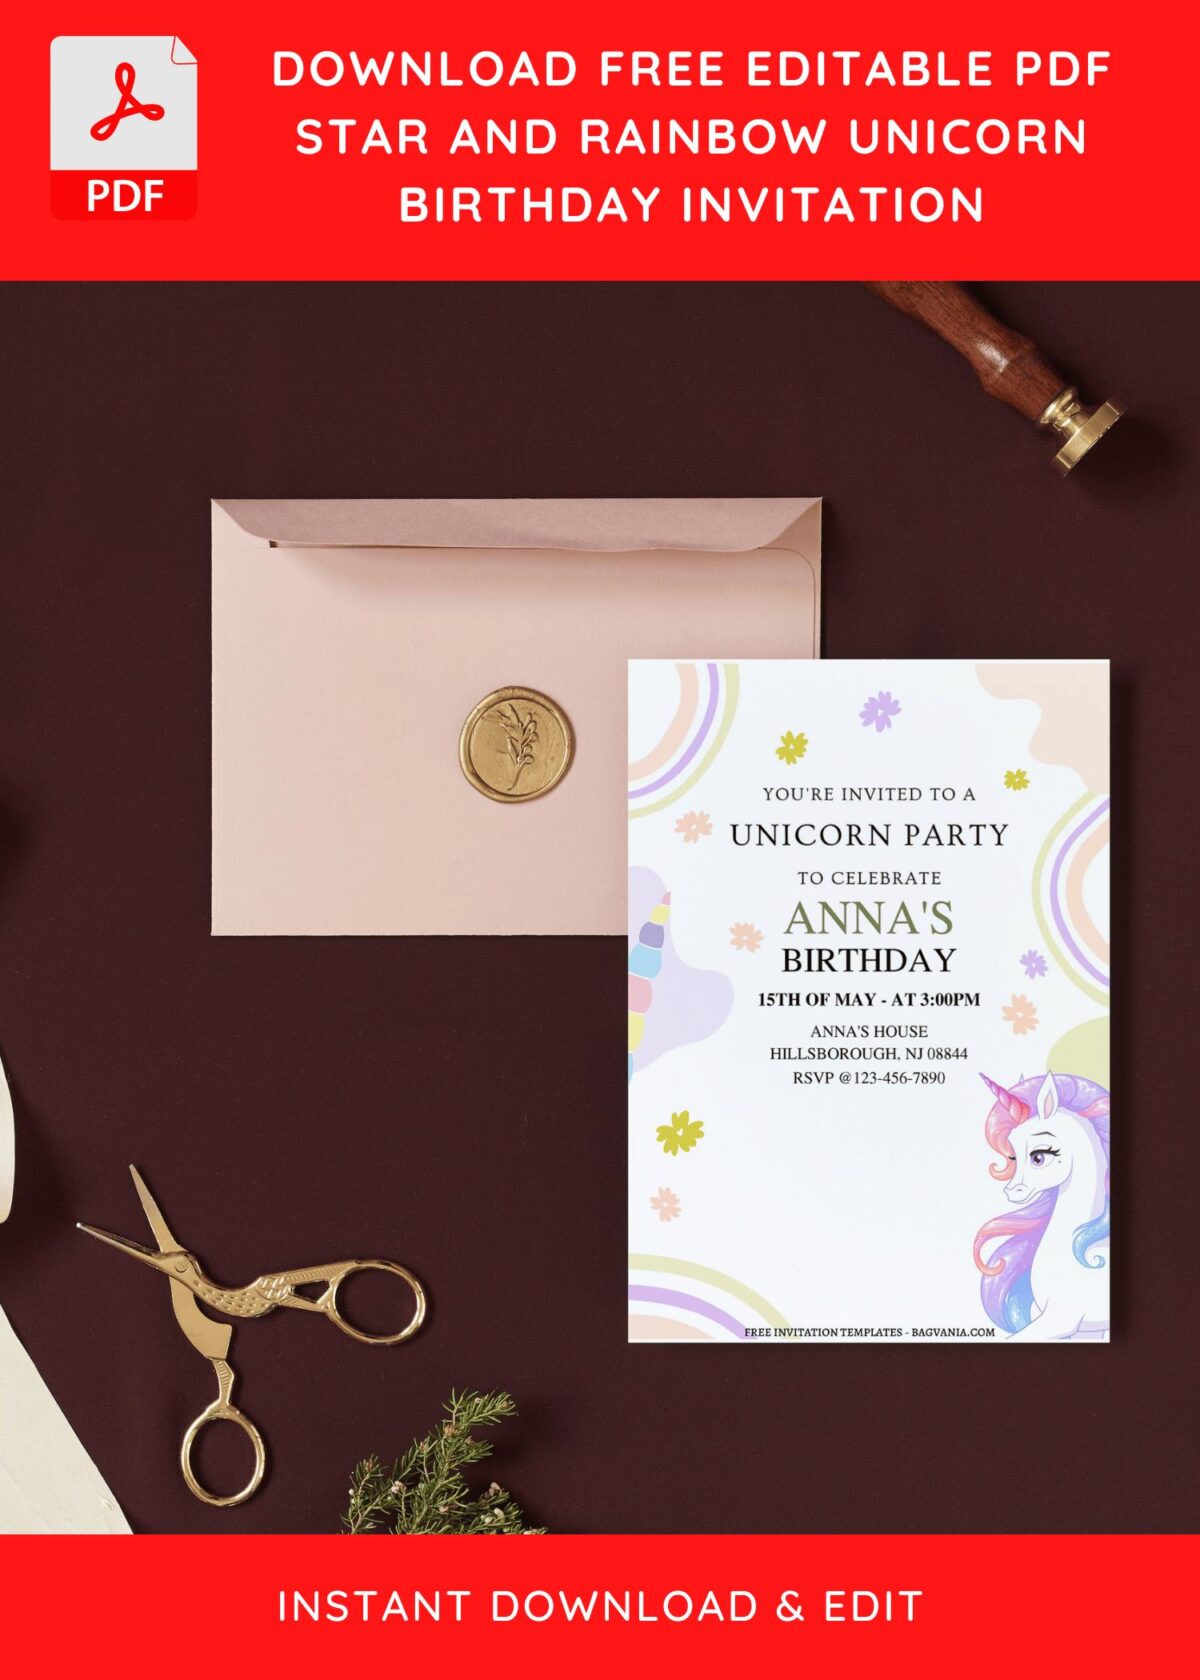 (Free Editable PDF) Spectral Rainbow Unicorn Birthday Invitation Templates I